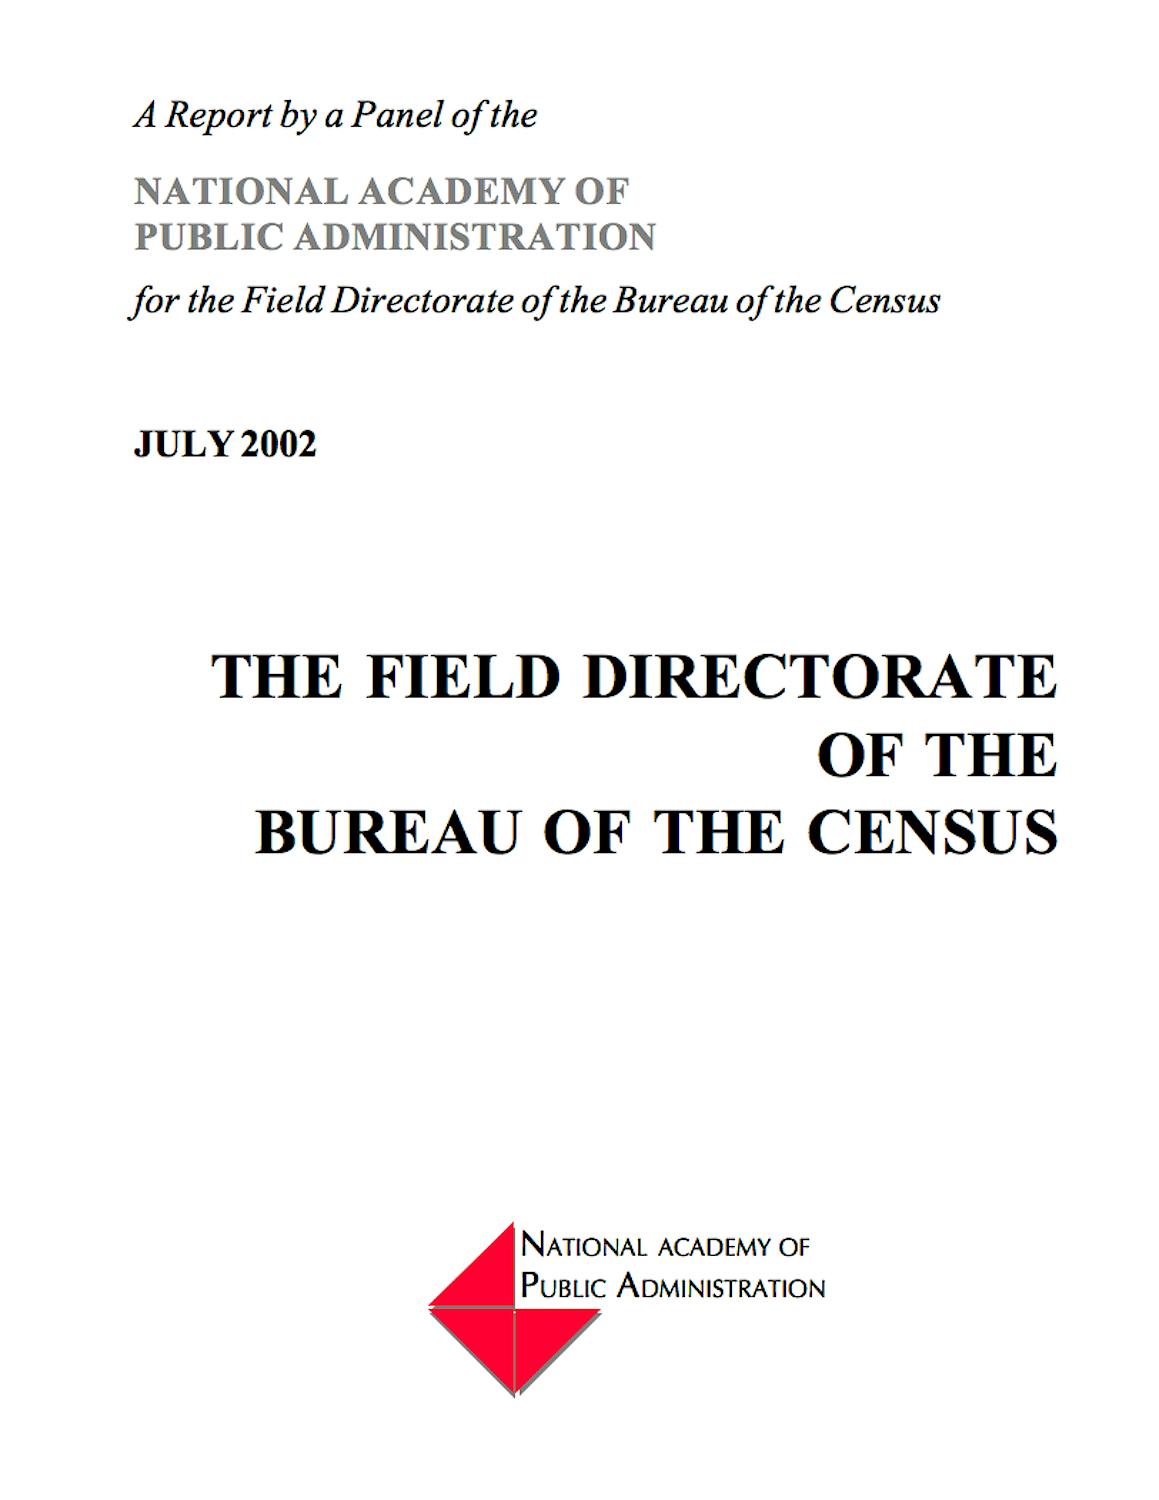 The Fieldof Directorateofthe Bureauofthe Census